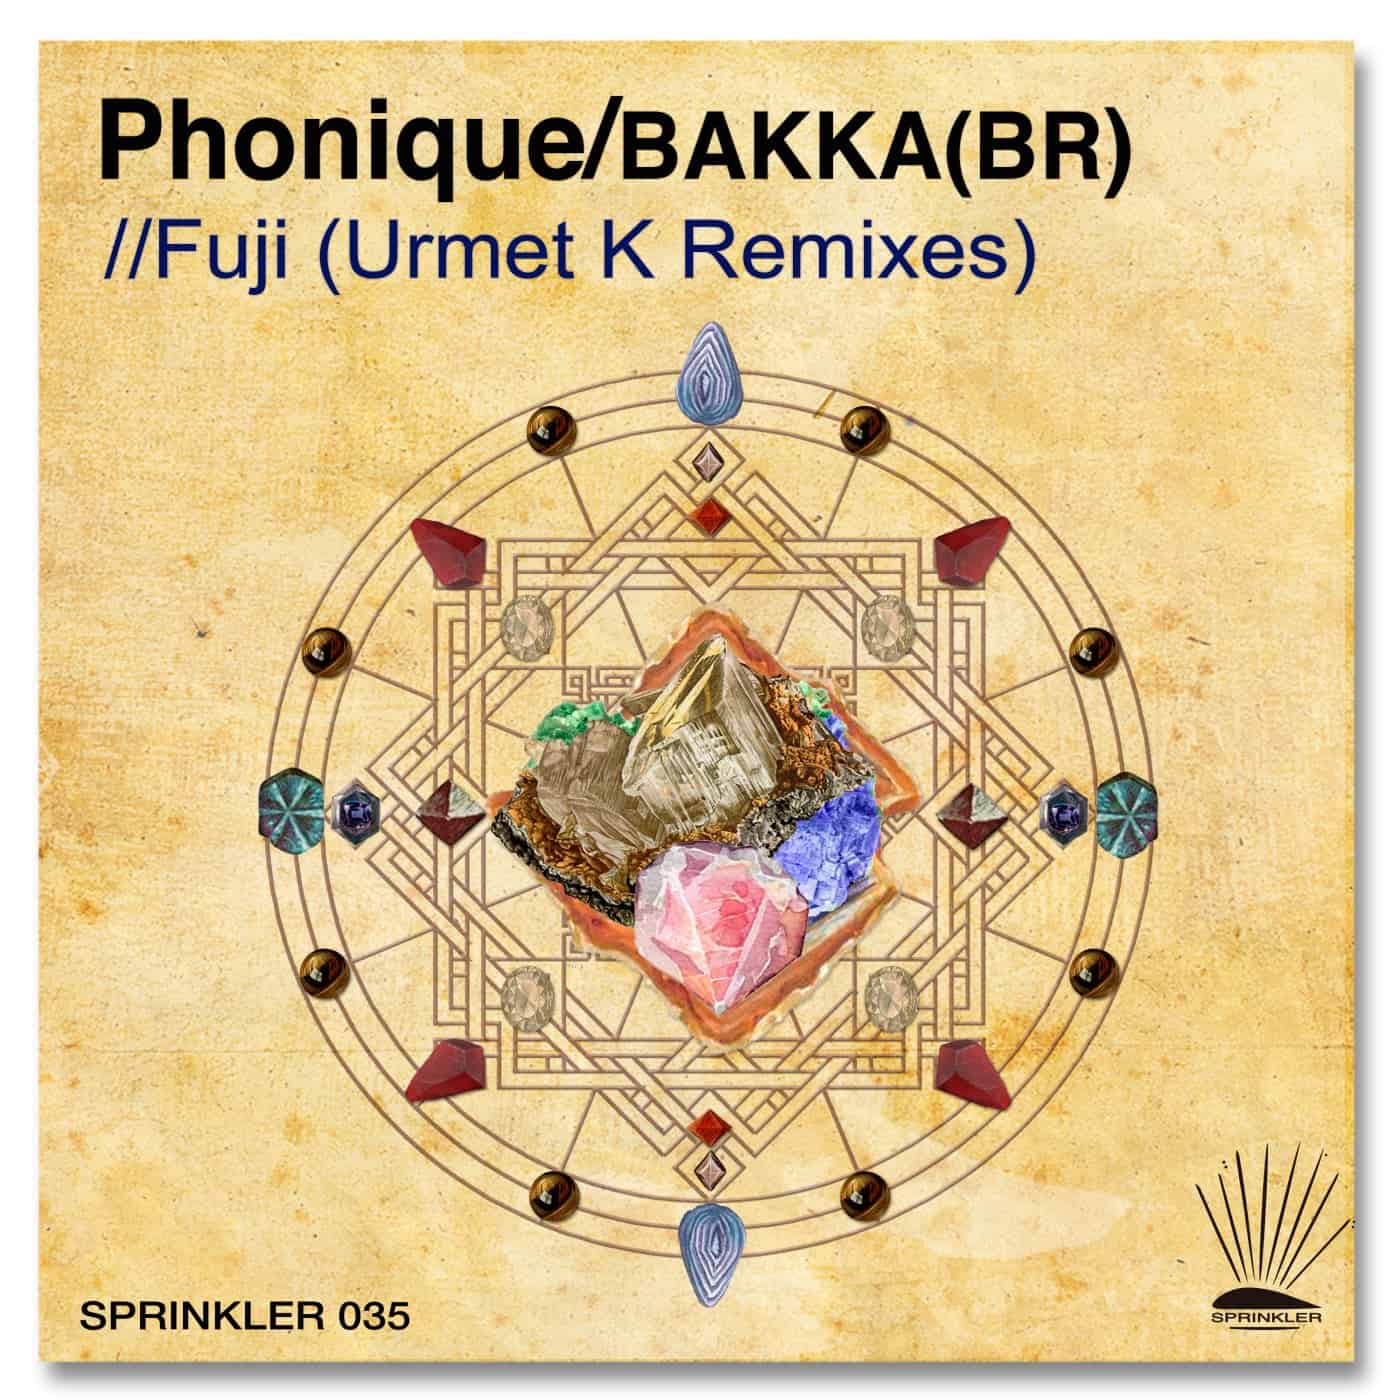 image cover: Phonique, Bakka (BR) - Fuji (Urmet K Remixes) / SPRINKLER035